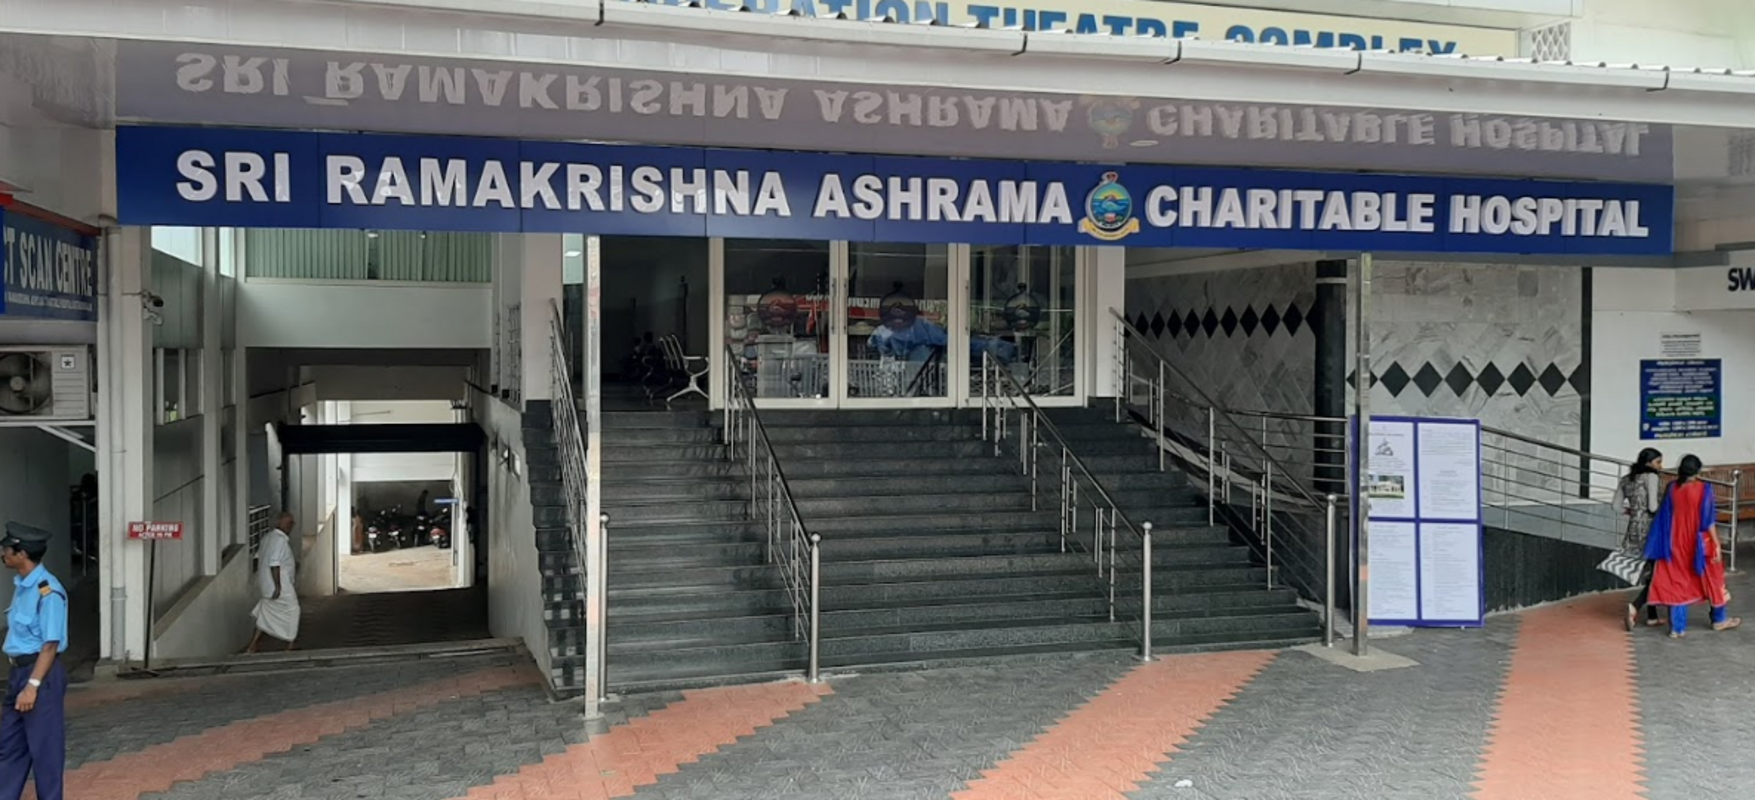 Sri Ramakrishna Ashrama Charitable Hospital photo